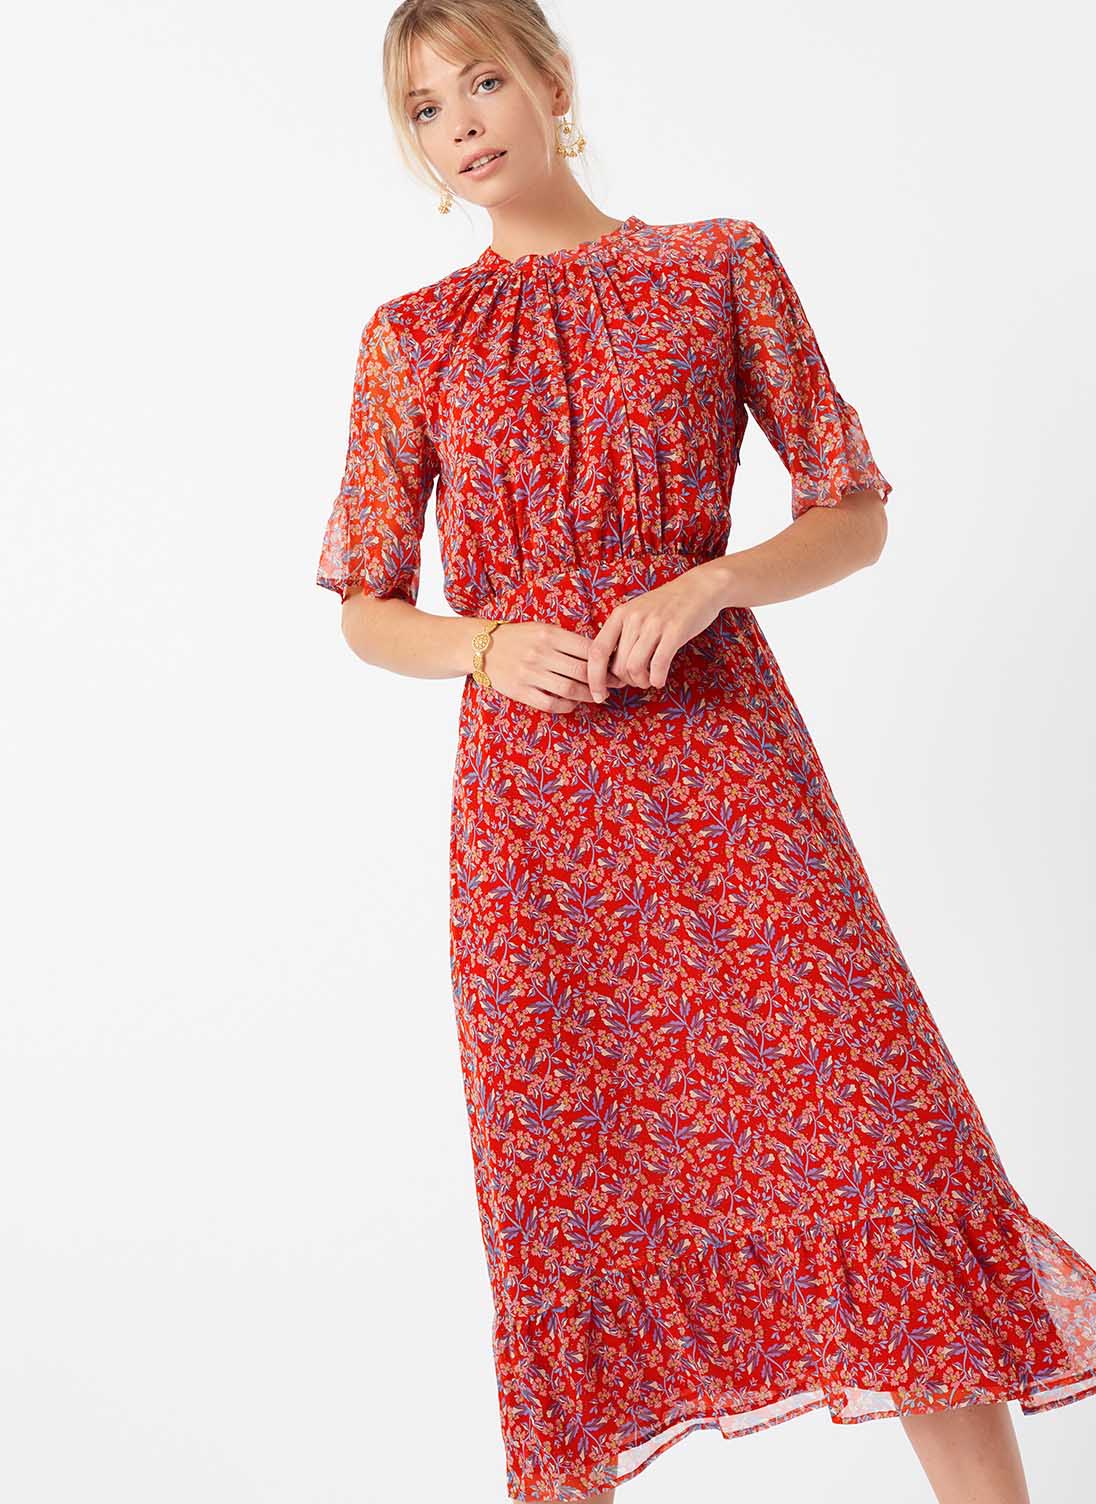 Liberty Print Silk Chiffon Dress Poppy floral